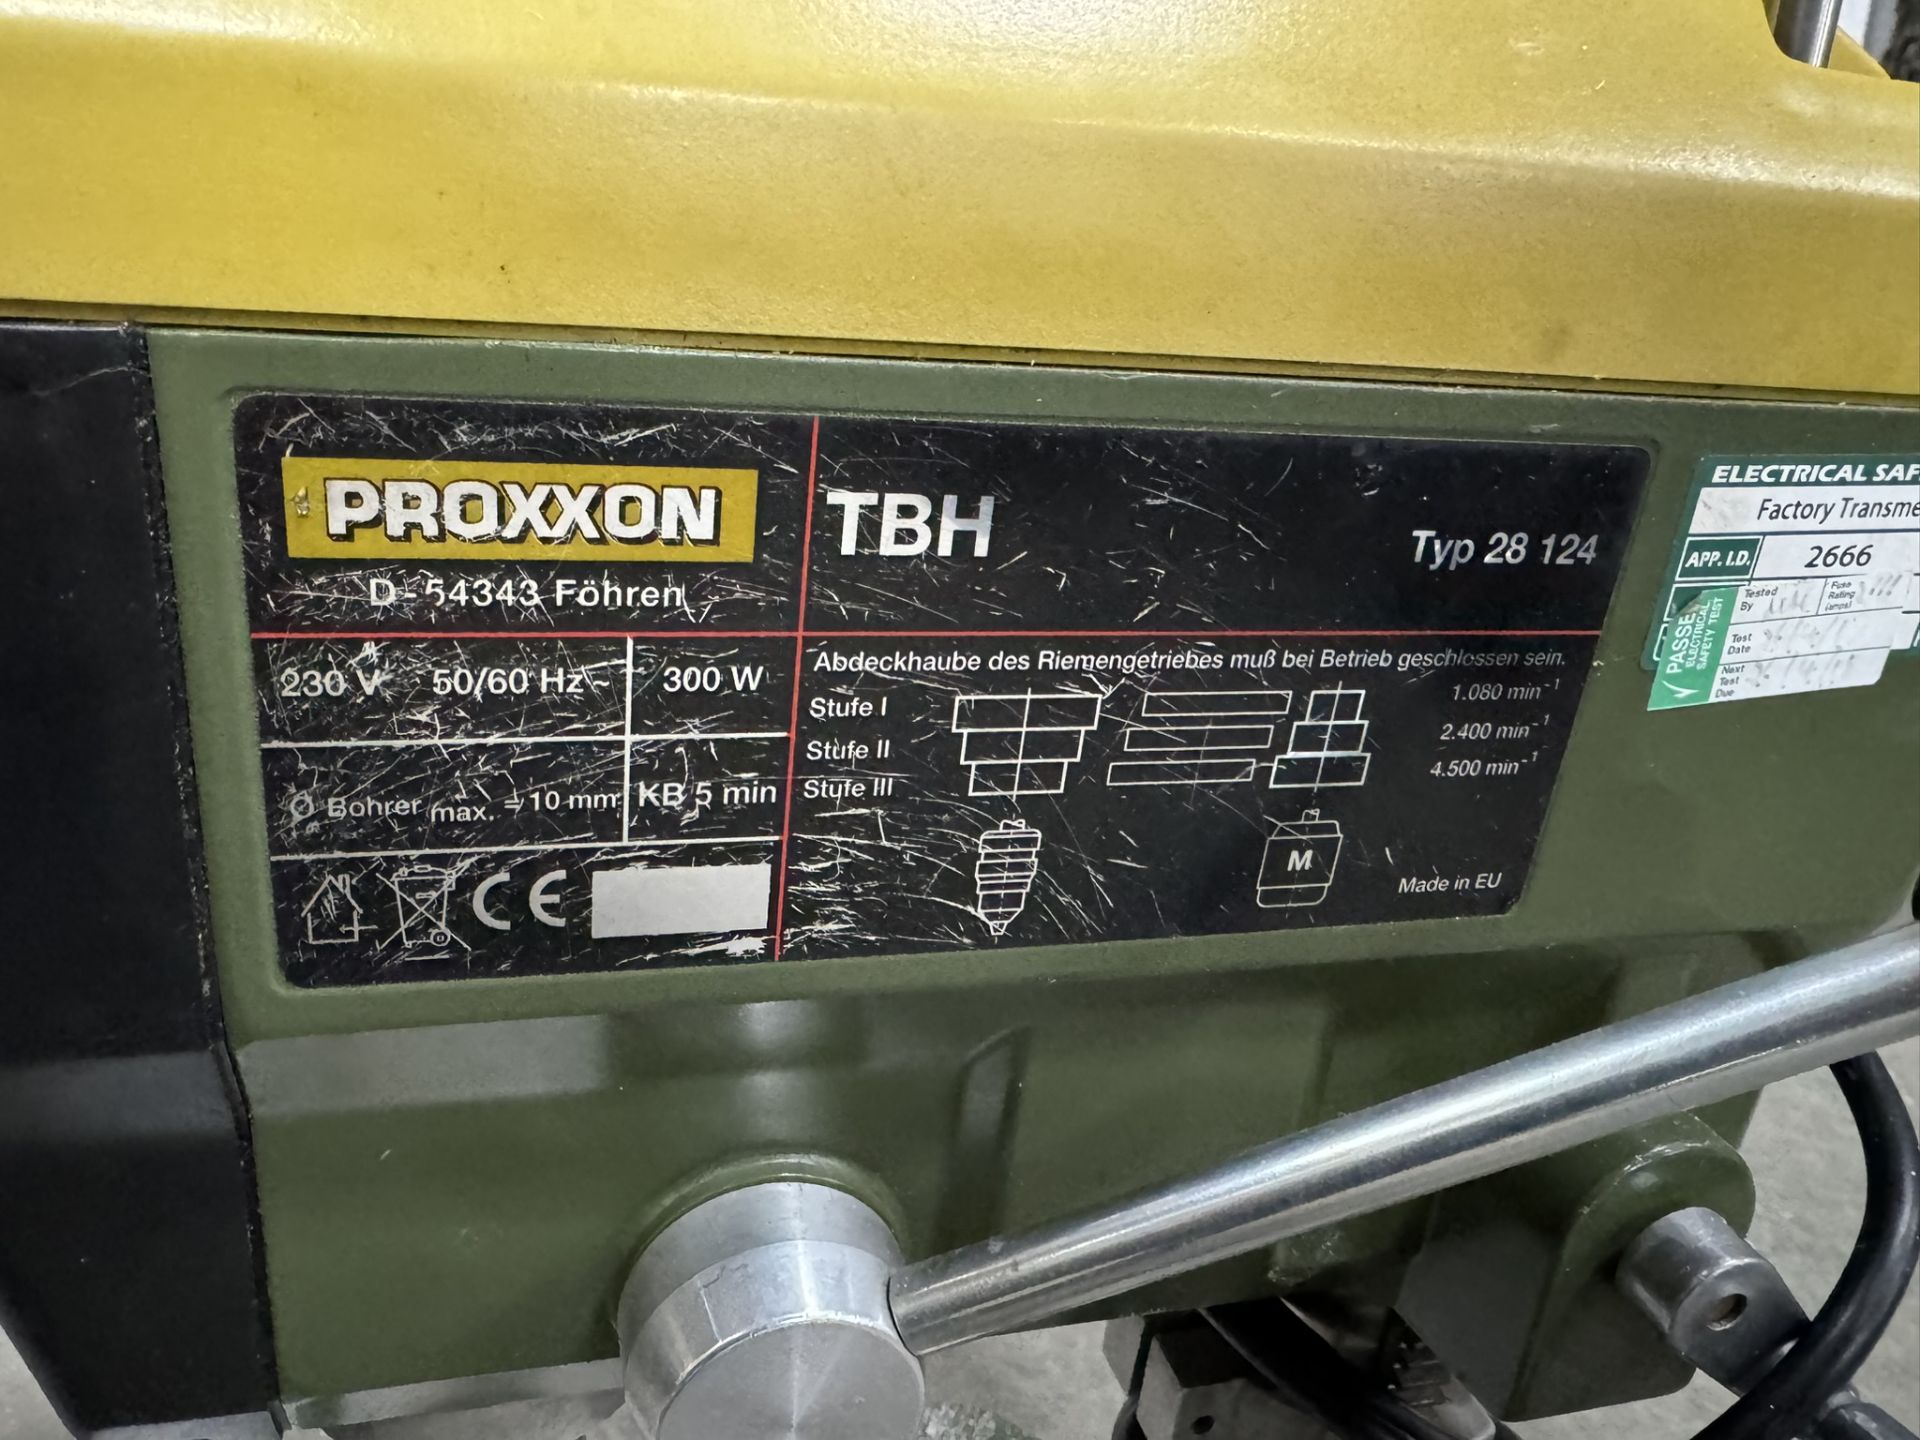 Proxxon 28124 TBH Bench Drill - Bild 11 aus 12